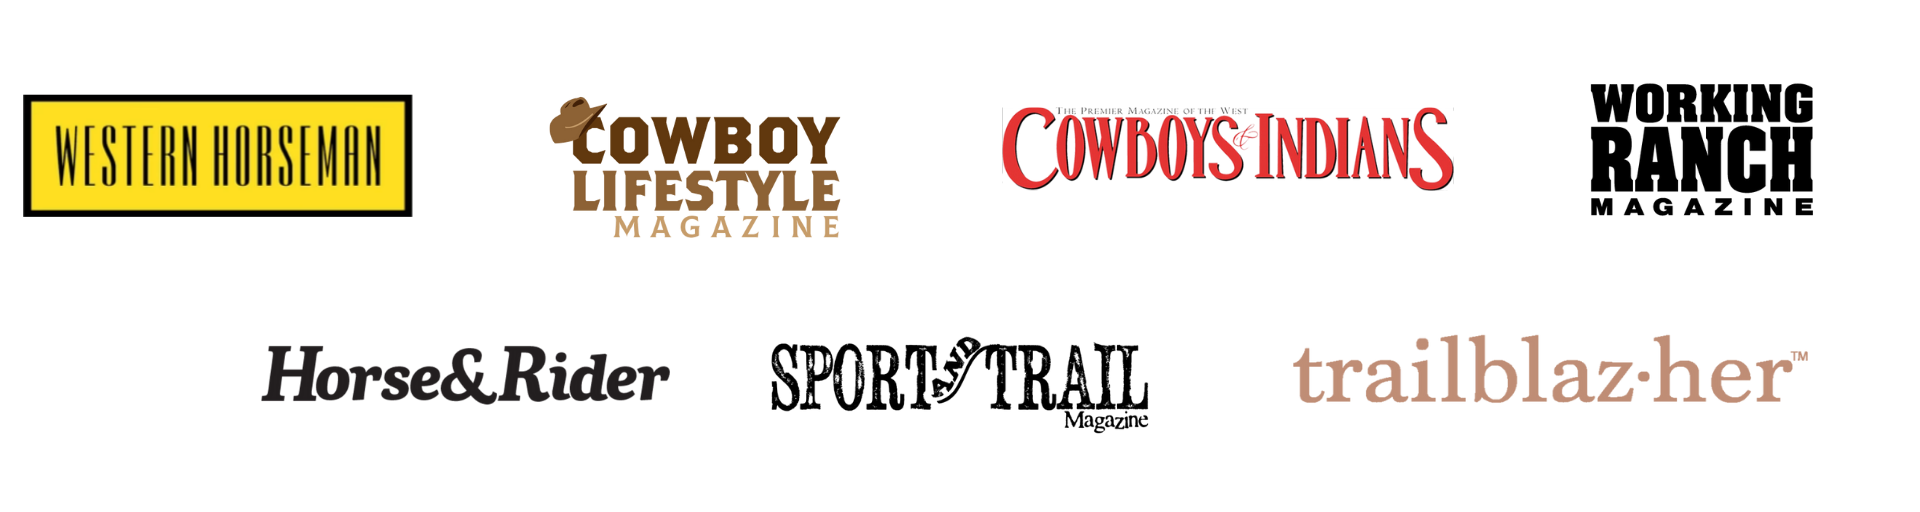 magazine logos